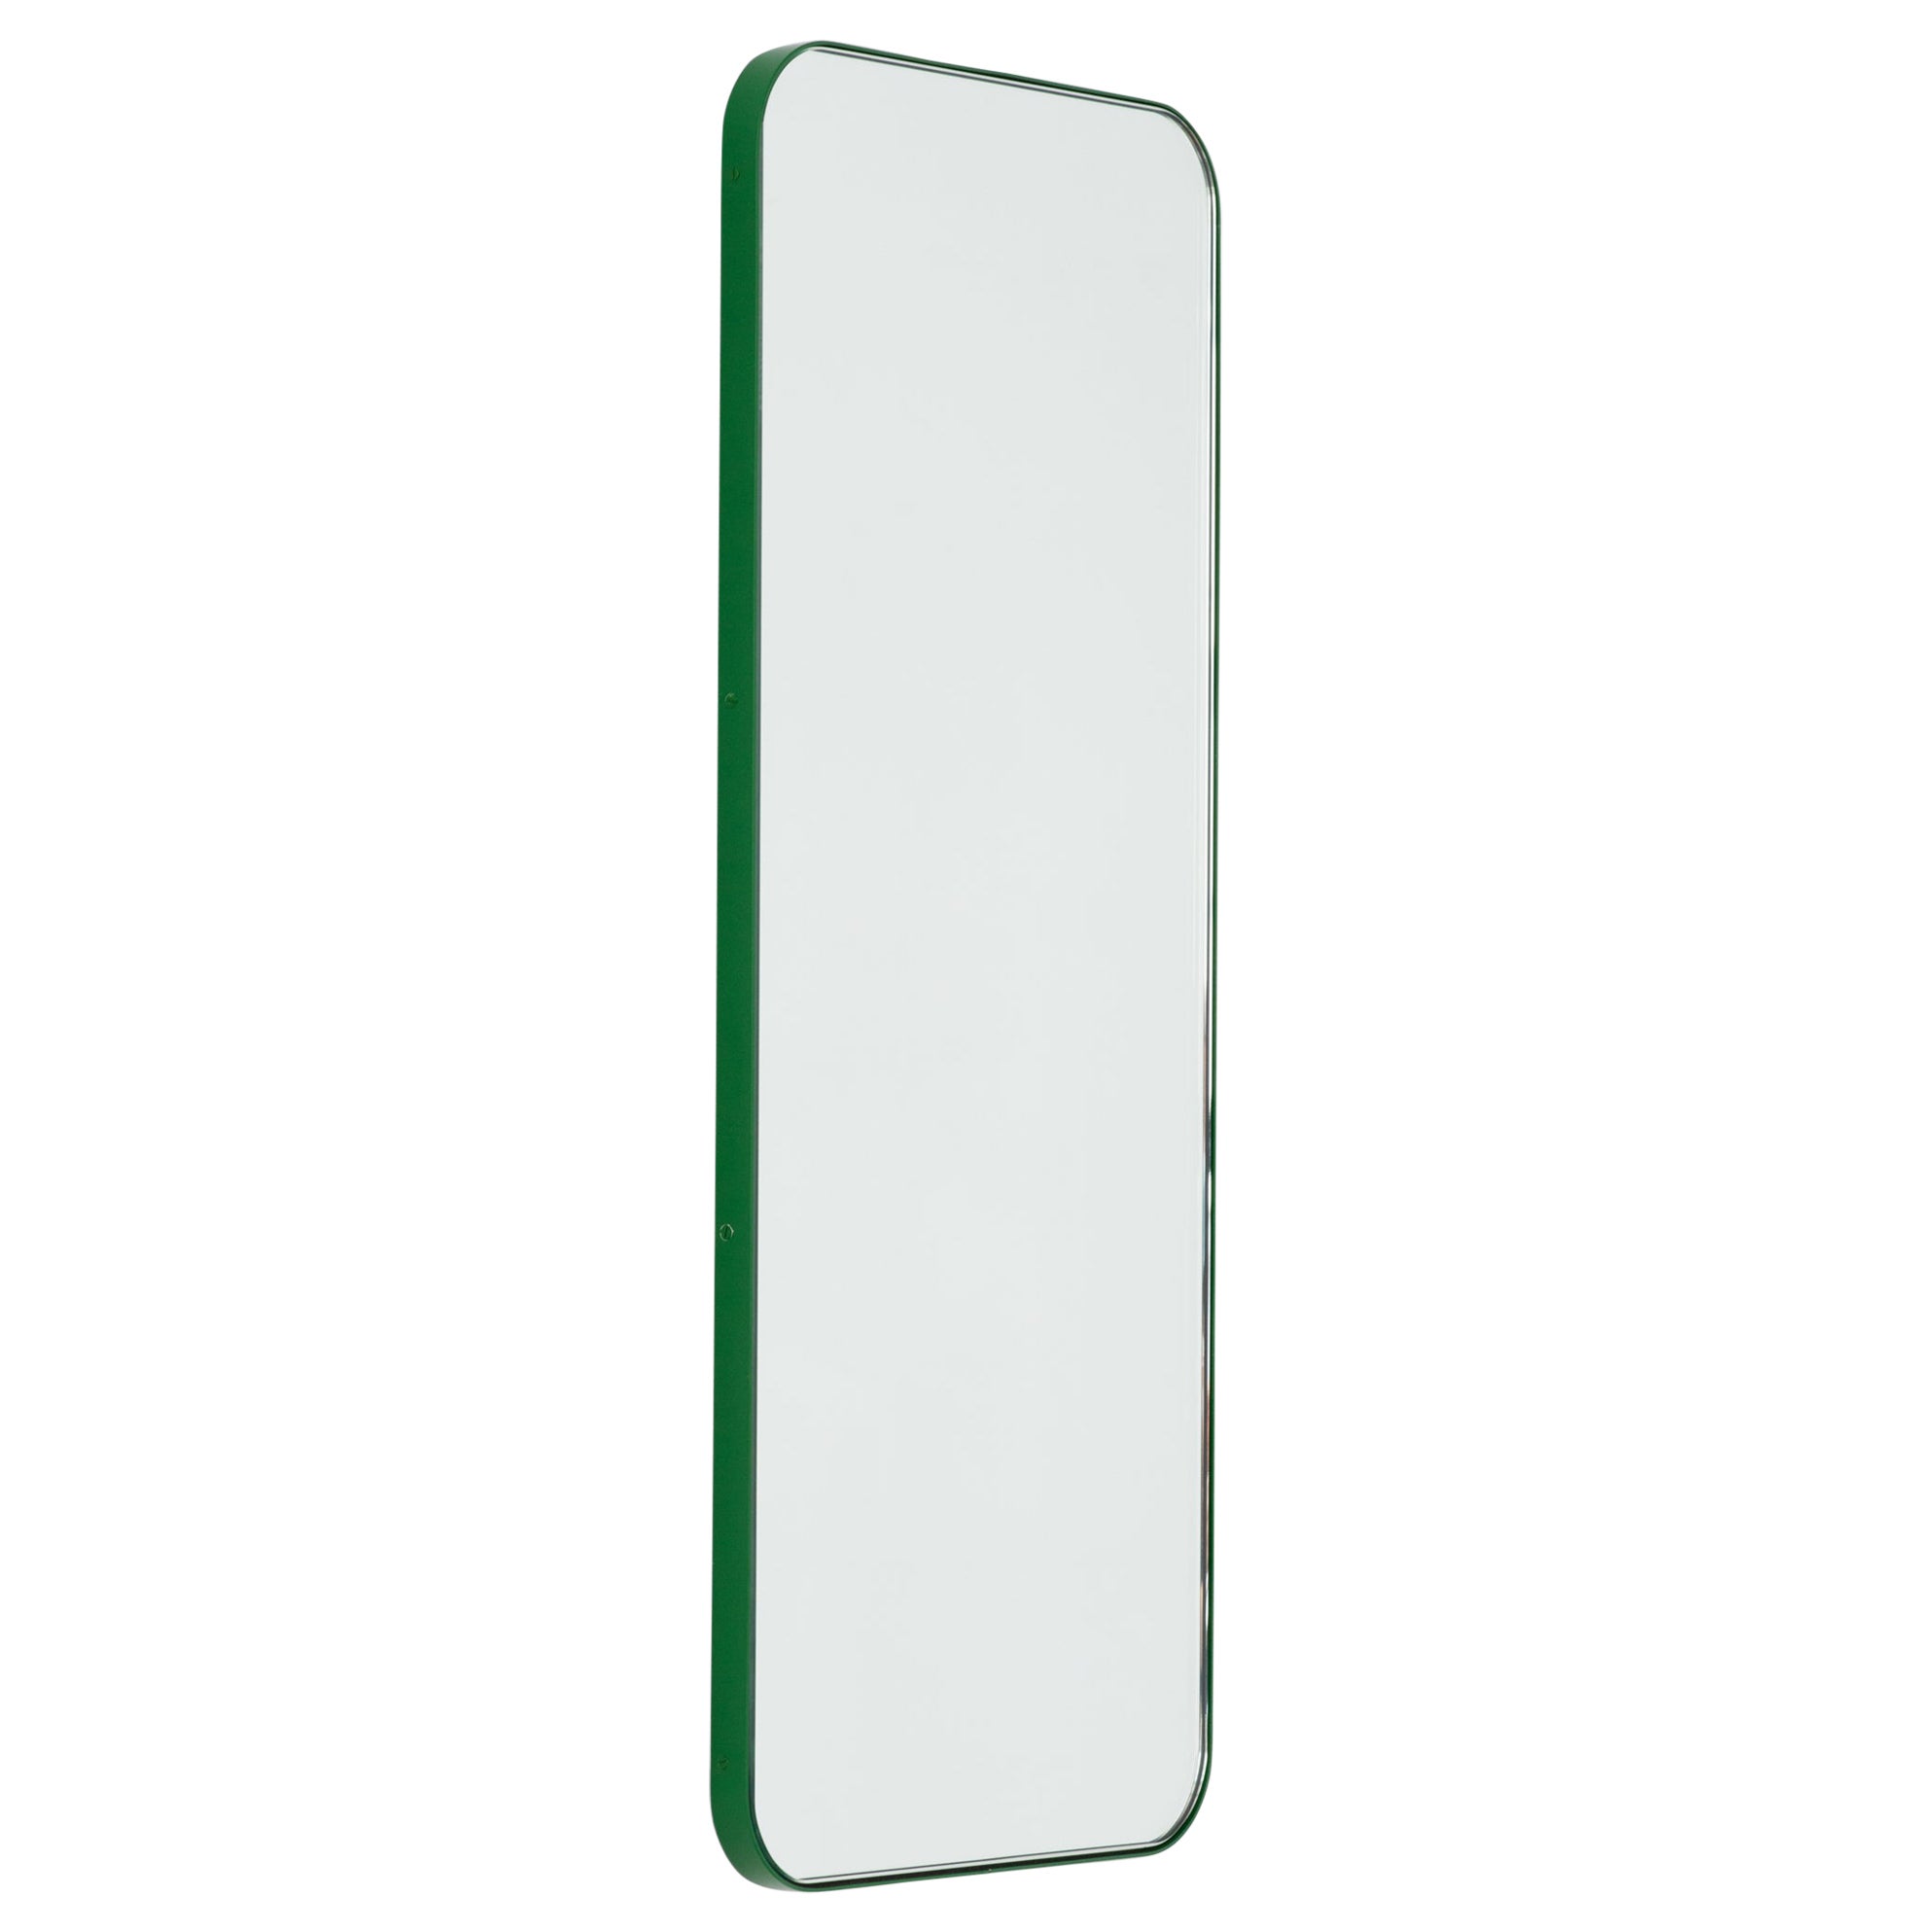 Quadris Rectangular Modern Wall Mirror with a Green Frame, XL For Sale